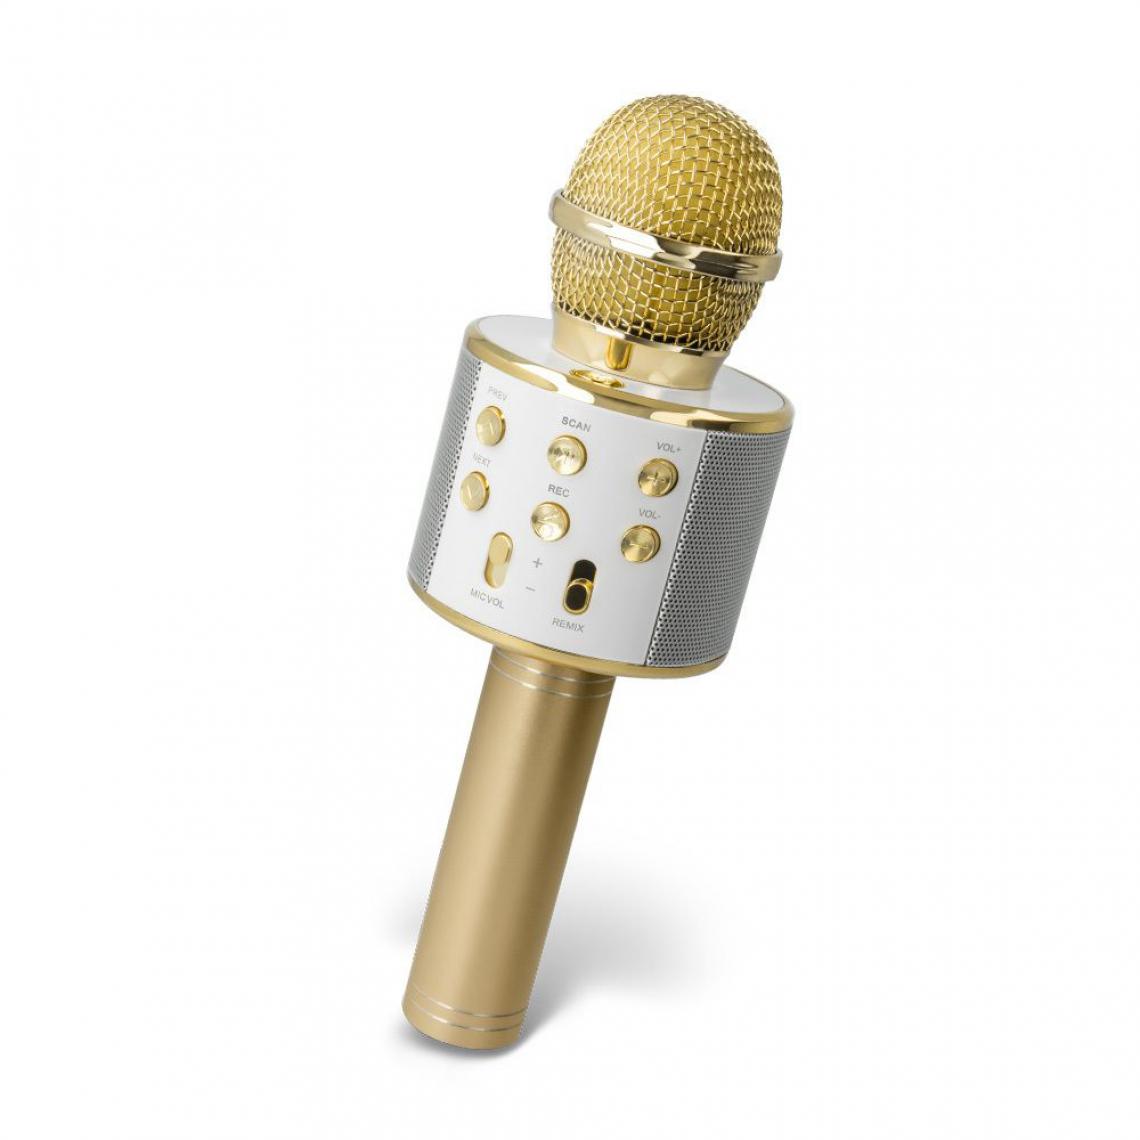 Ozzzo - Microphone Karaoke bluetooth haut parleur ozzzo Gold Or pour Huawei P20 Lite 2019 - Autres accessoires smartphone